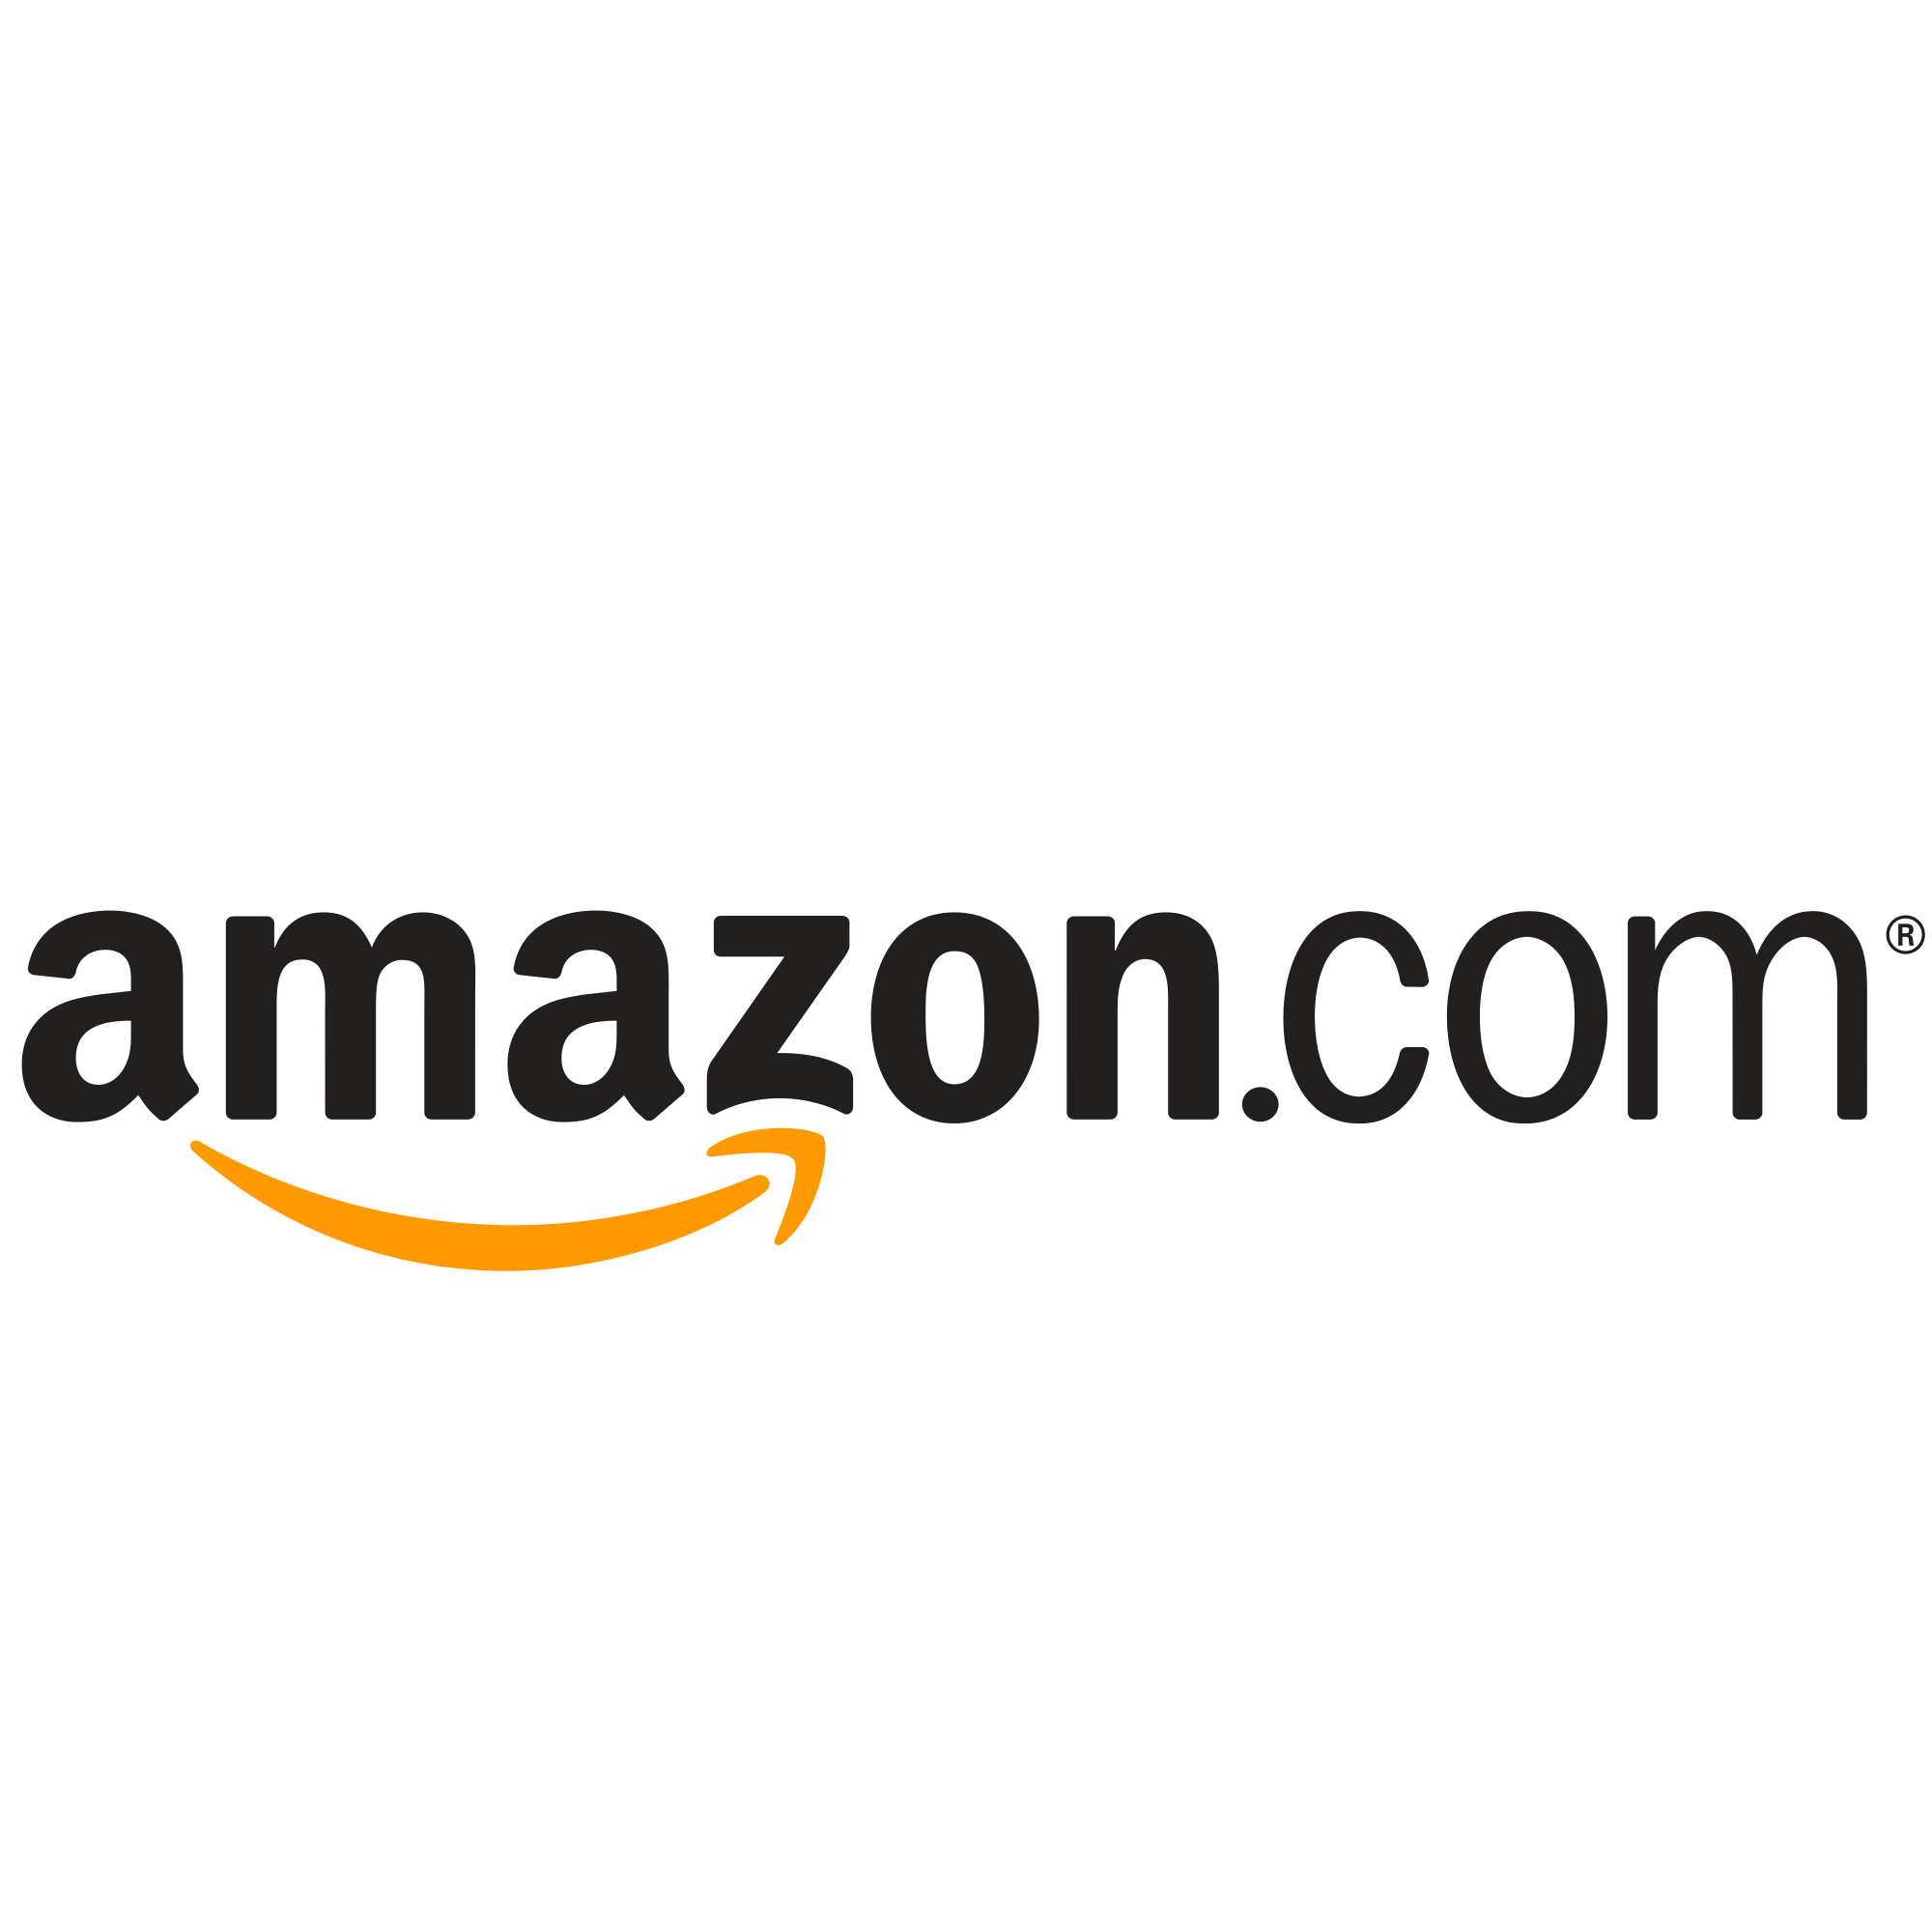 Prime Amazon Smile Logo - 5,000 Amazon Prime Subscribers to Jeff Bezos: Dump Trump - We Are ...